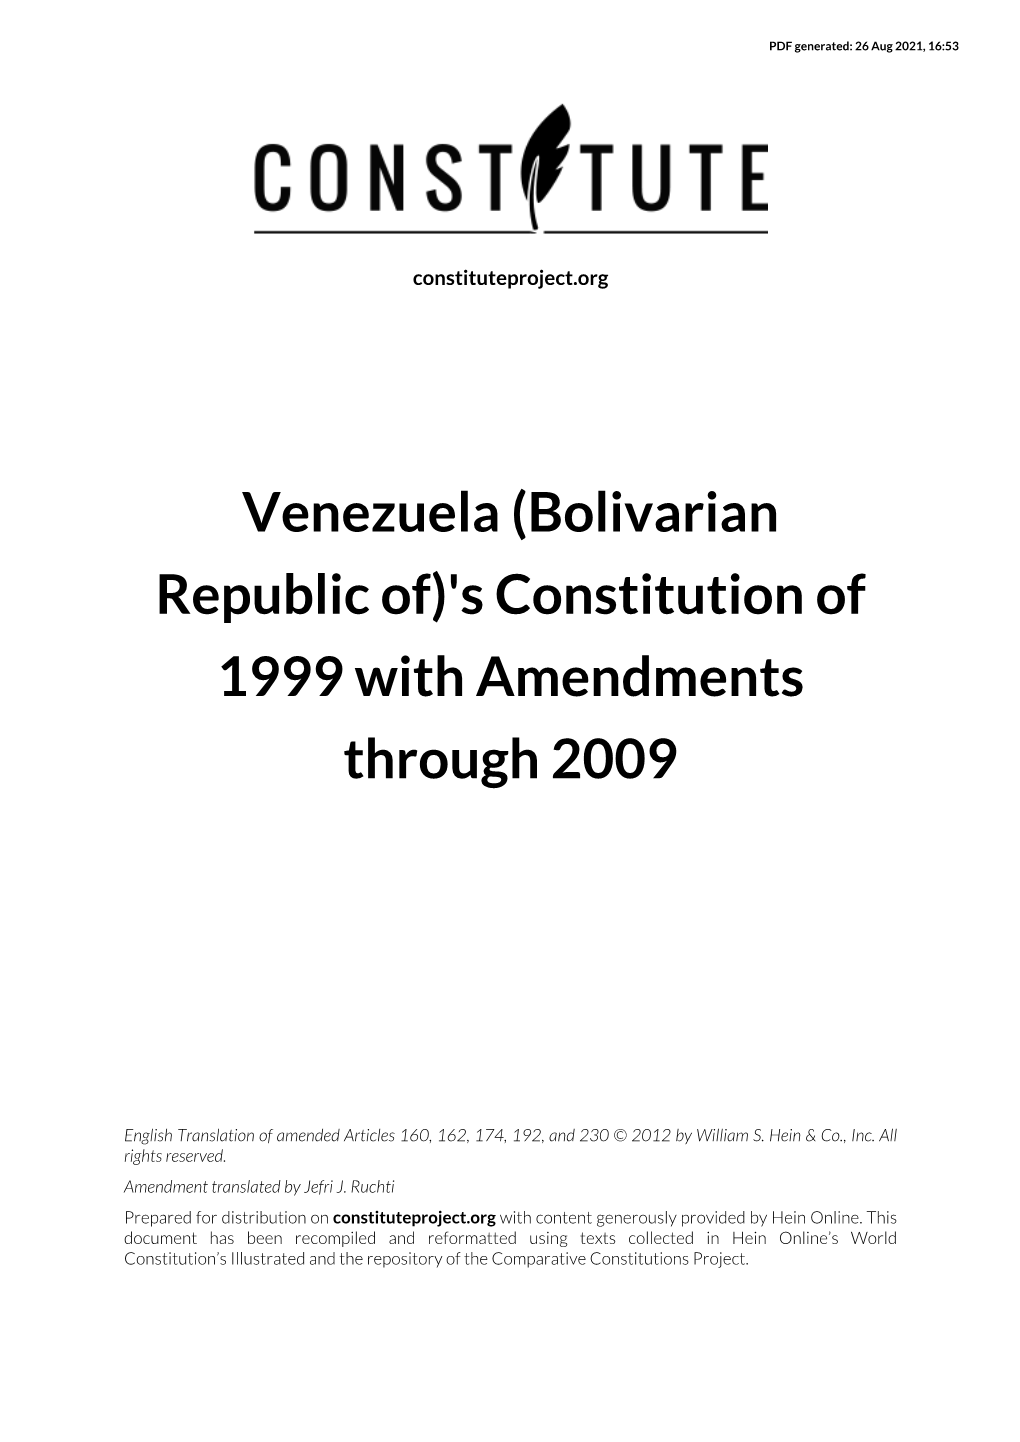 Venezuela (Bolivarian Republic Of)'S Constitution of 1999 with Amendments Through 2009